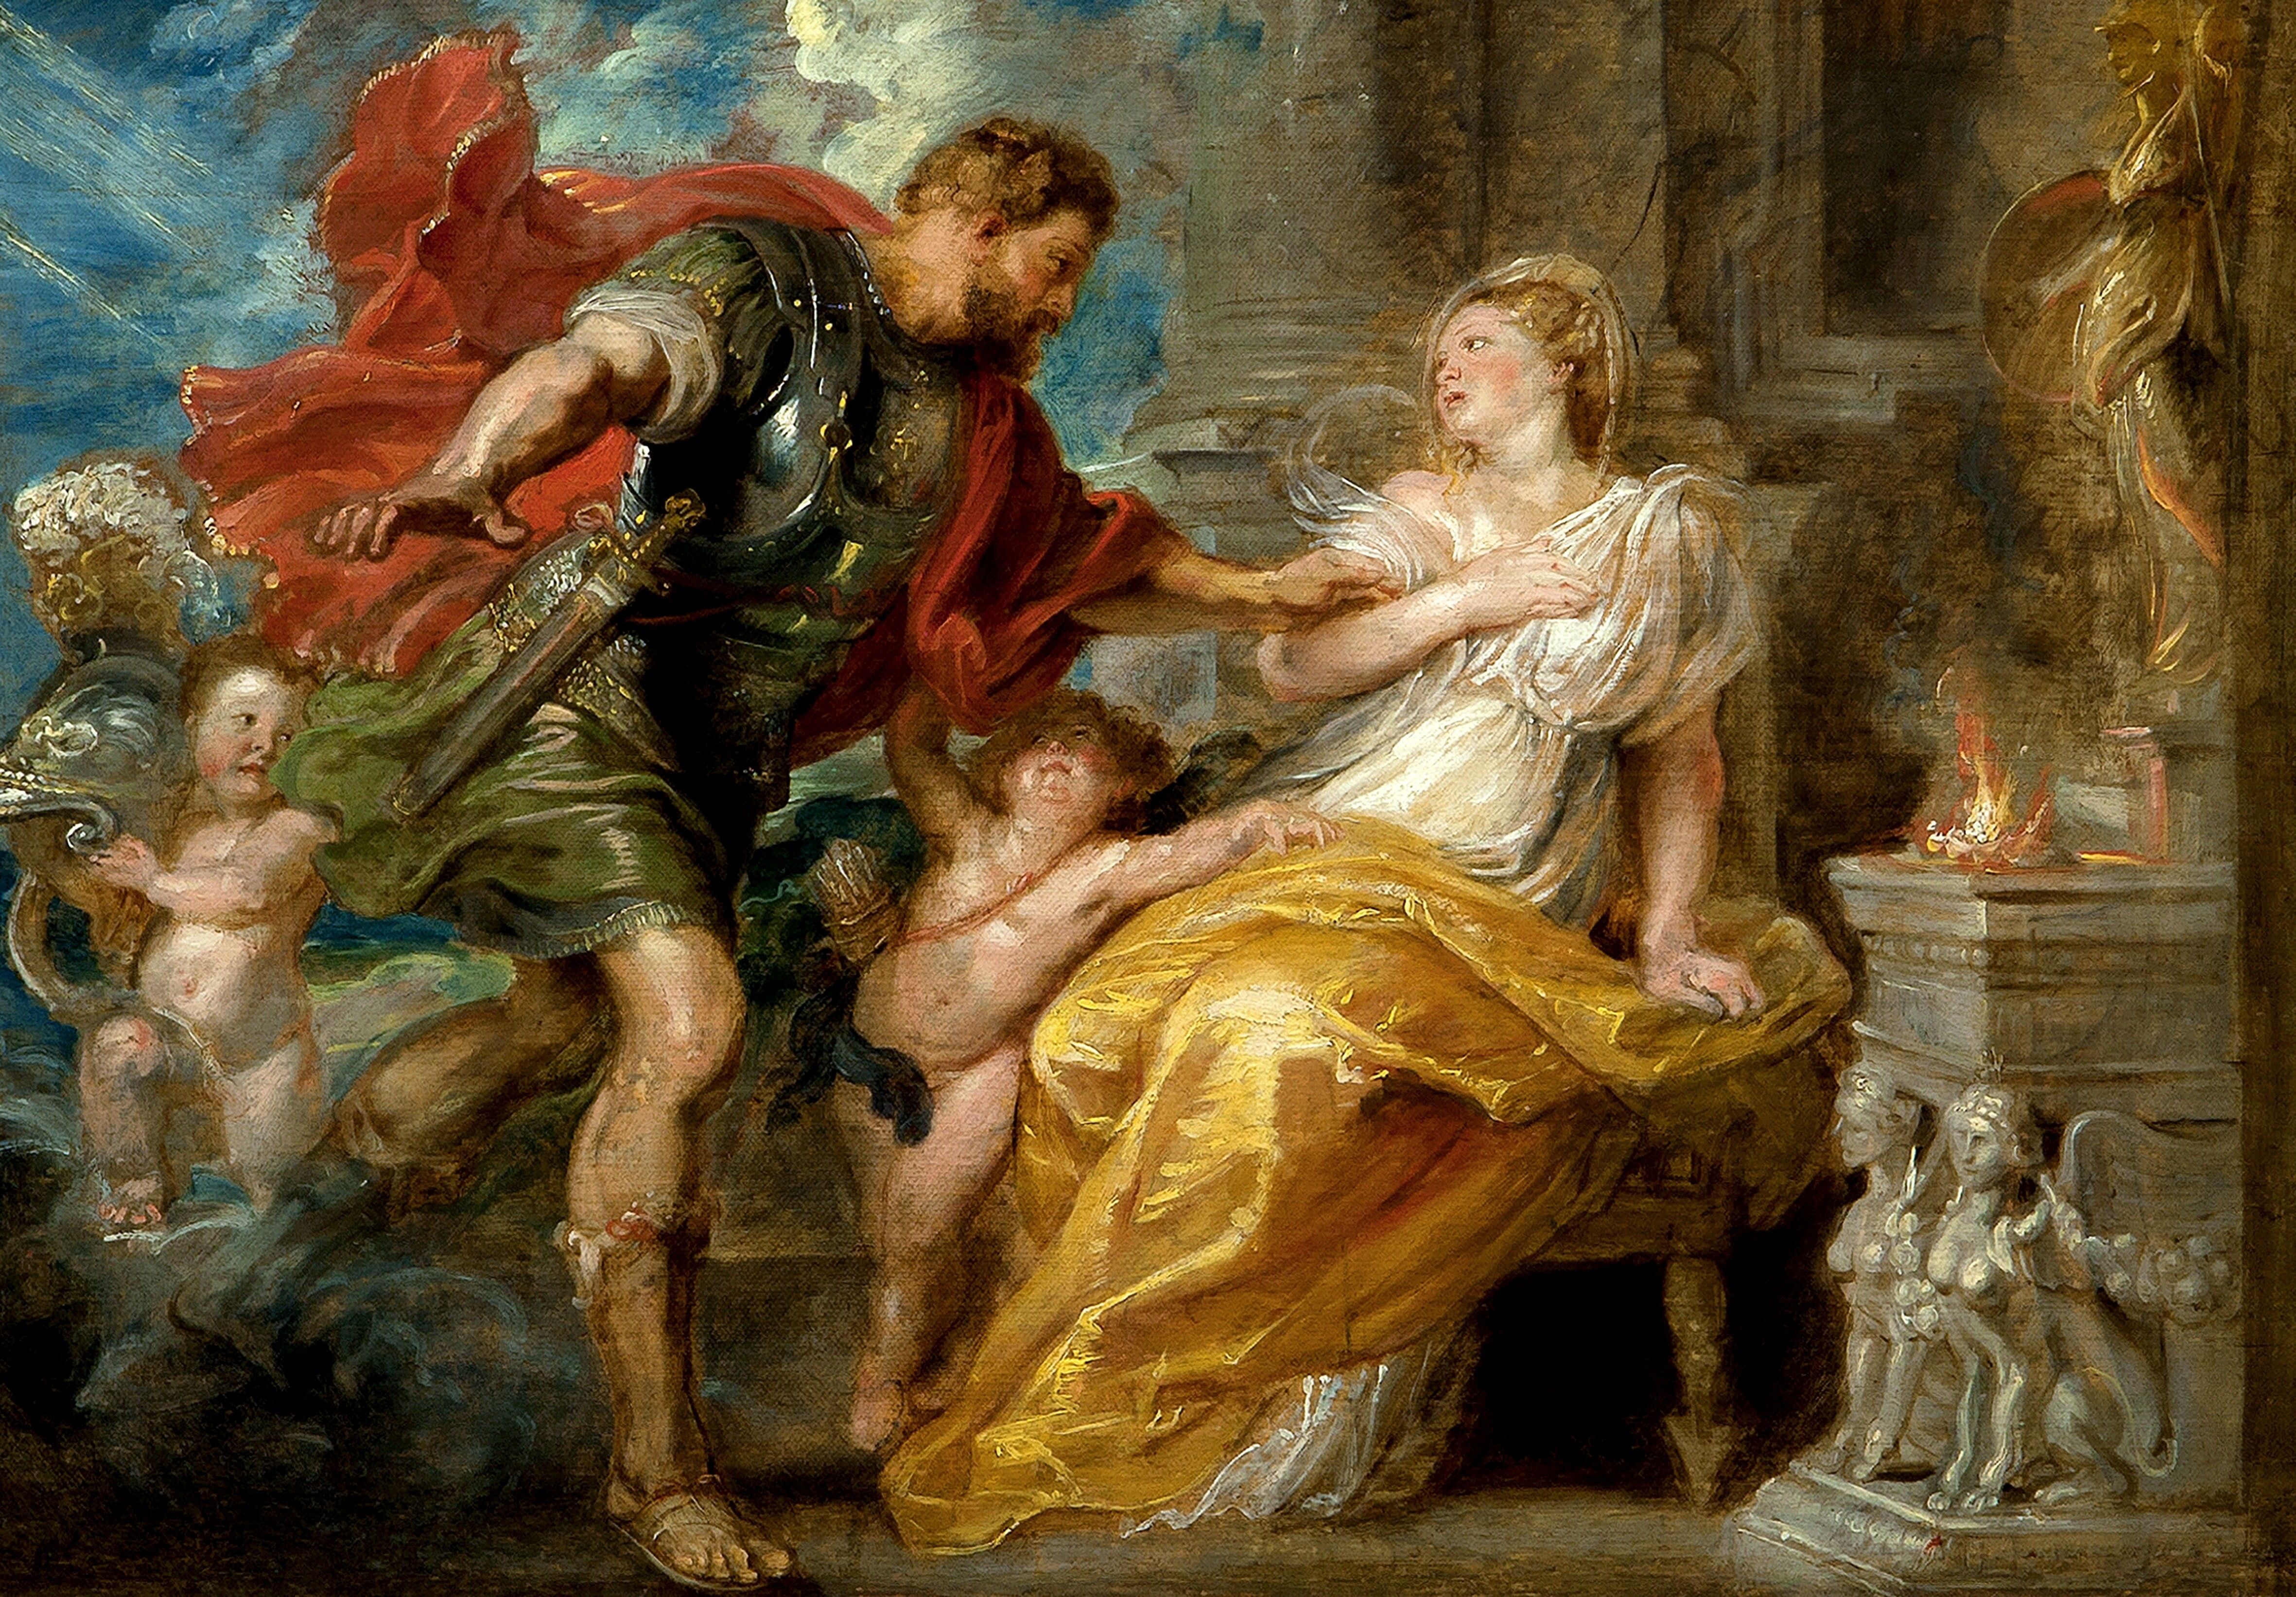 Mars and Rhea Silvia by Pieter Paul Rubens